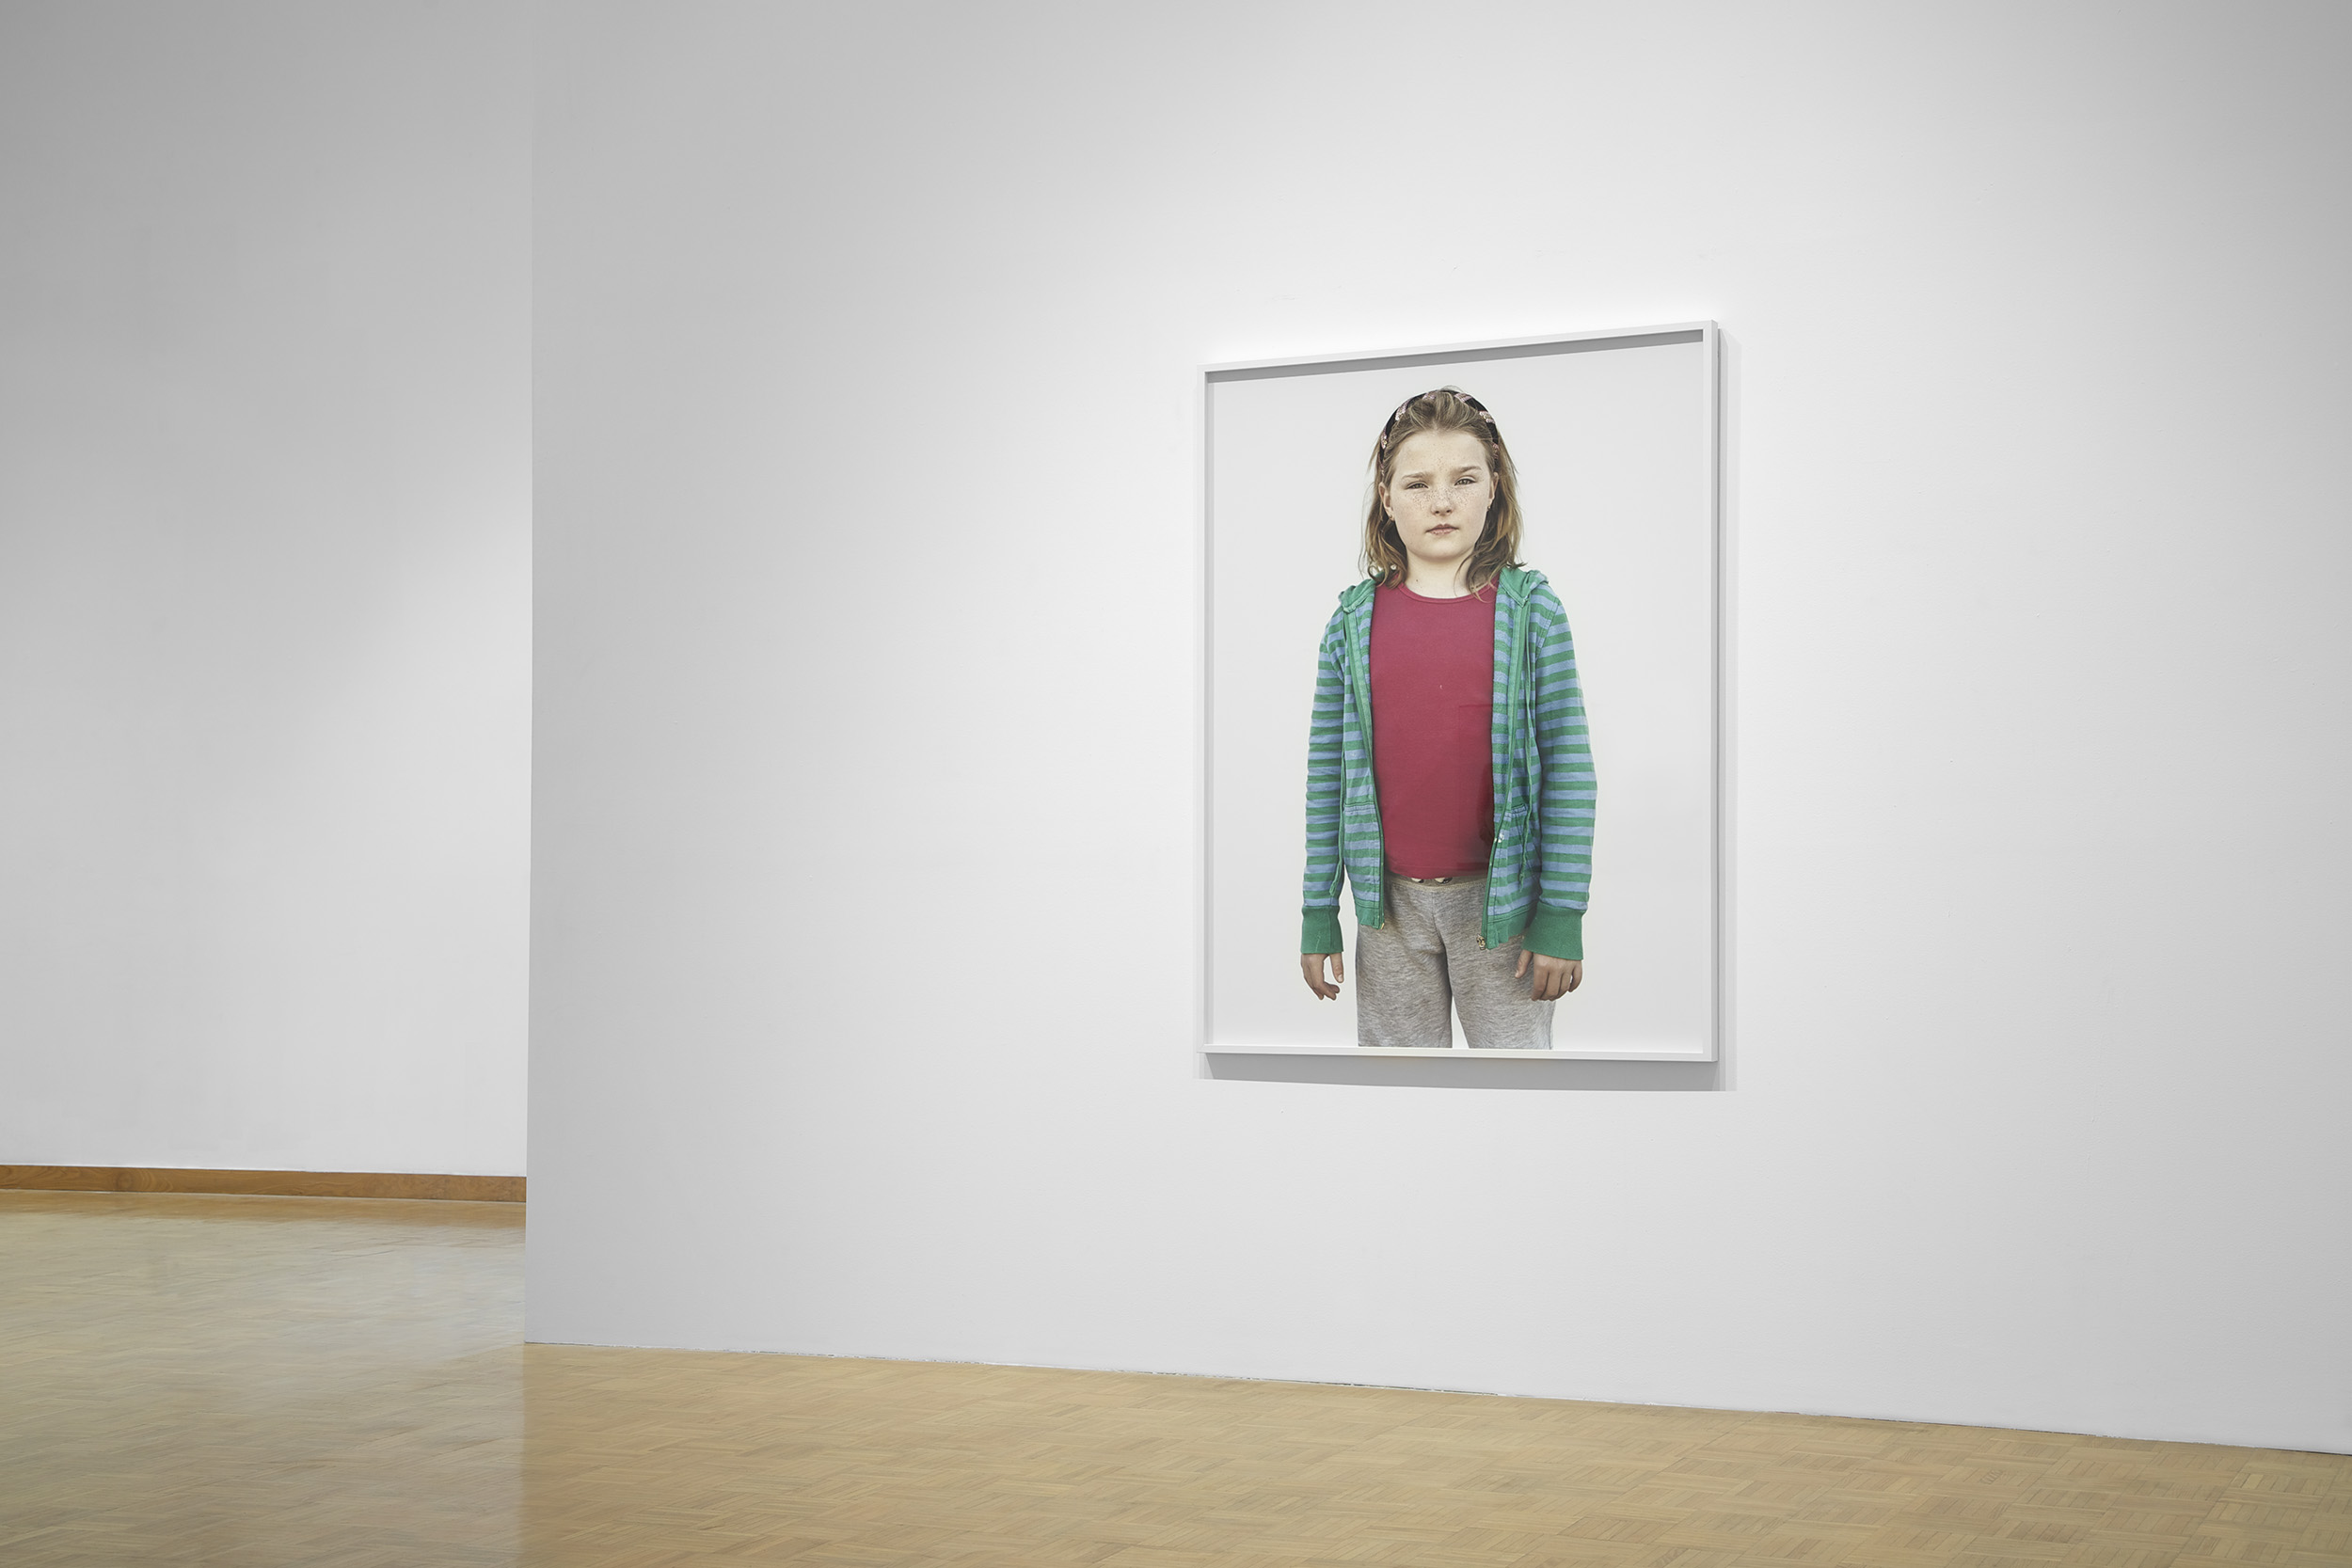   Celina , 2013 Archival inkjet print 58.5" x 44"&nbsp;(148.6 x 111.7 cm) The Luckman Gallery, Los Angeles June 1 - June 15, 2015 